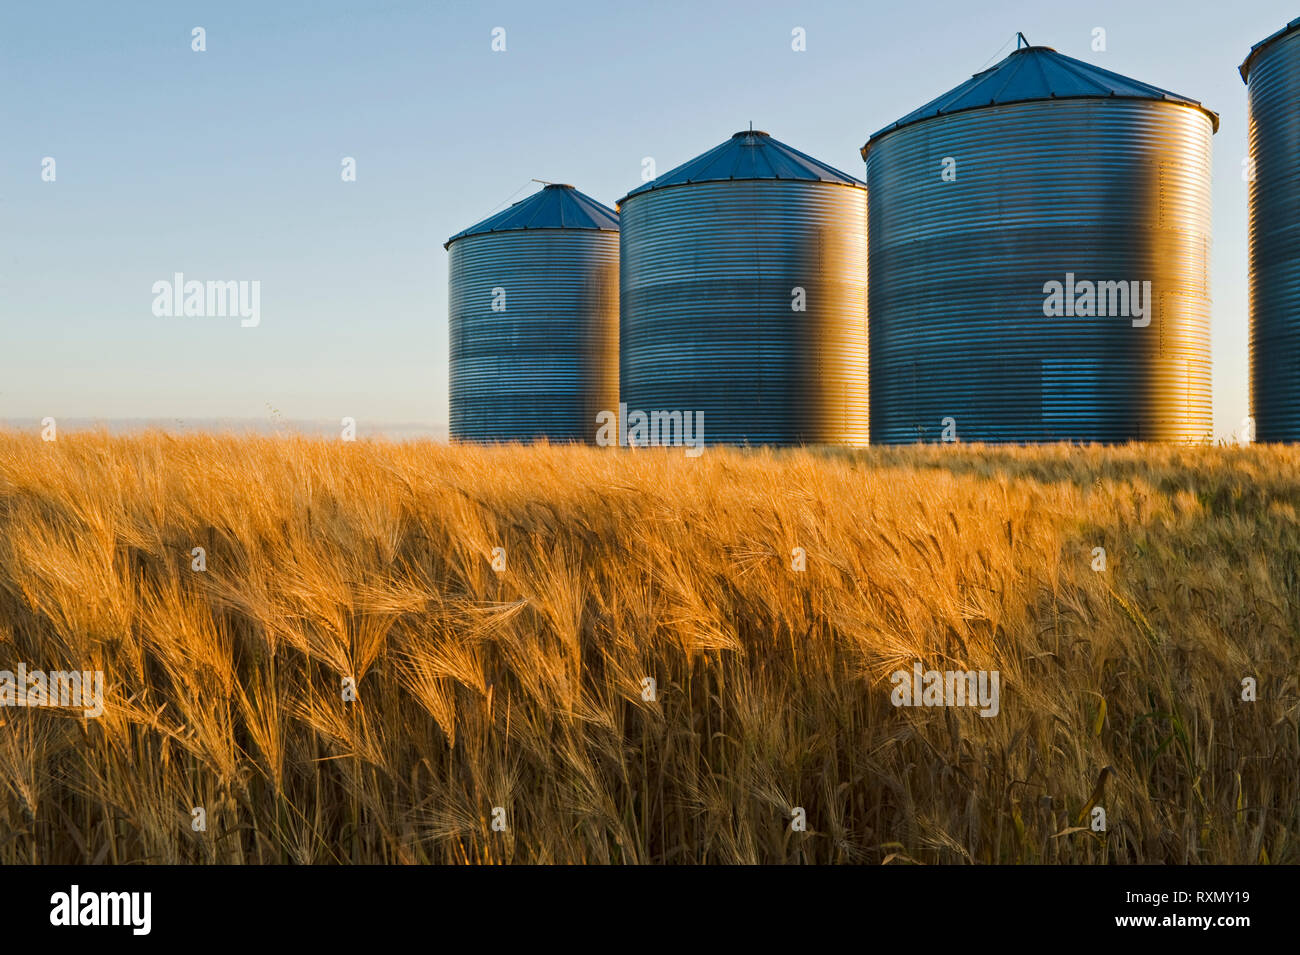 a maturing barley field with grain storage bins/silos in the background, near Carey, Manitoba, Canada Stock Photo